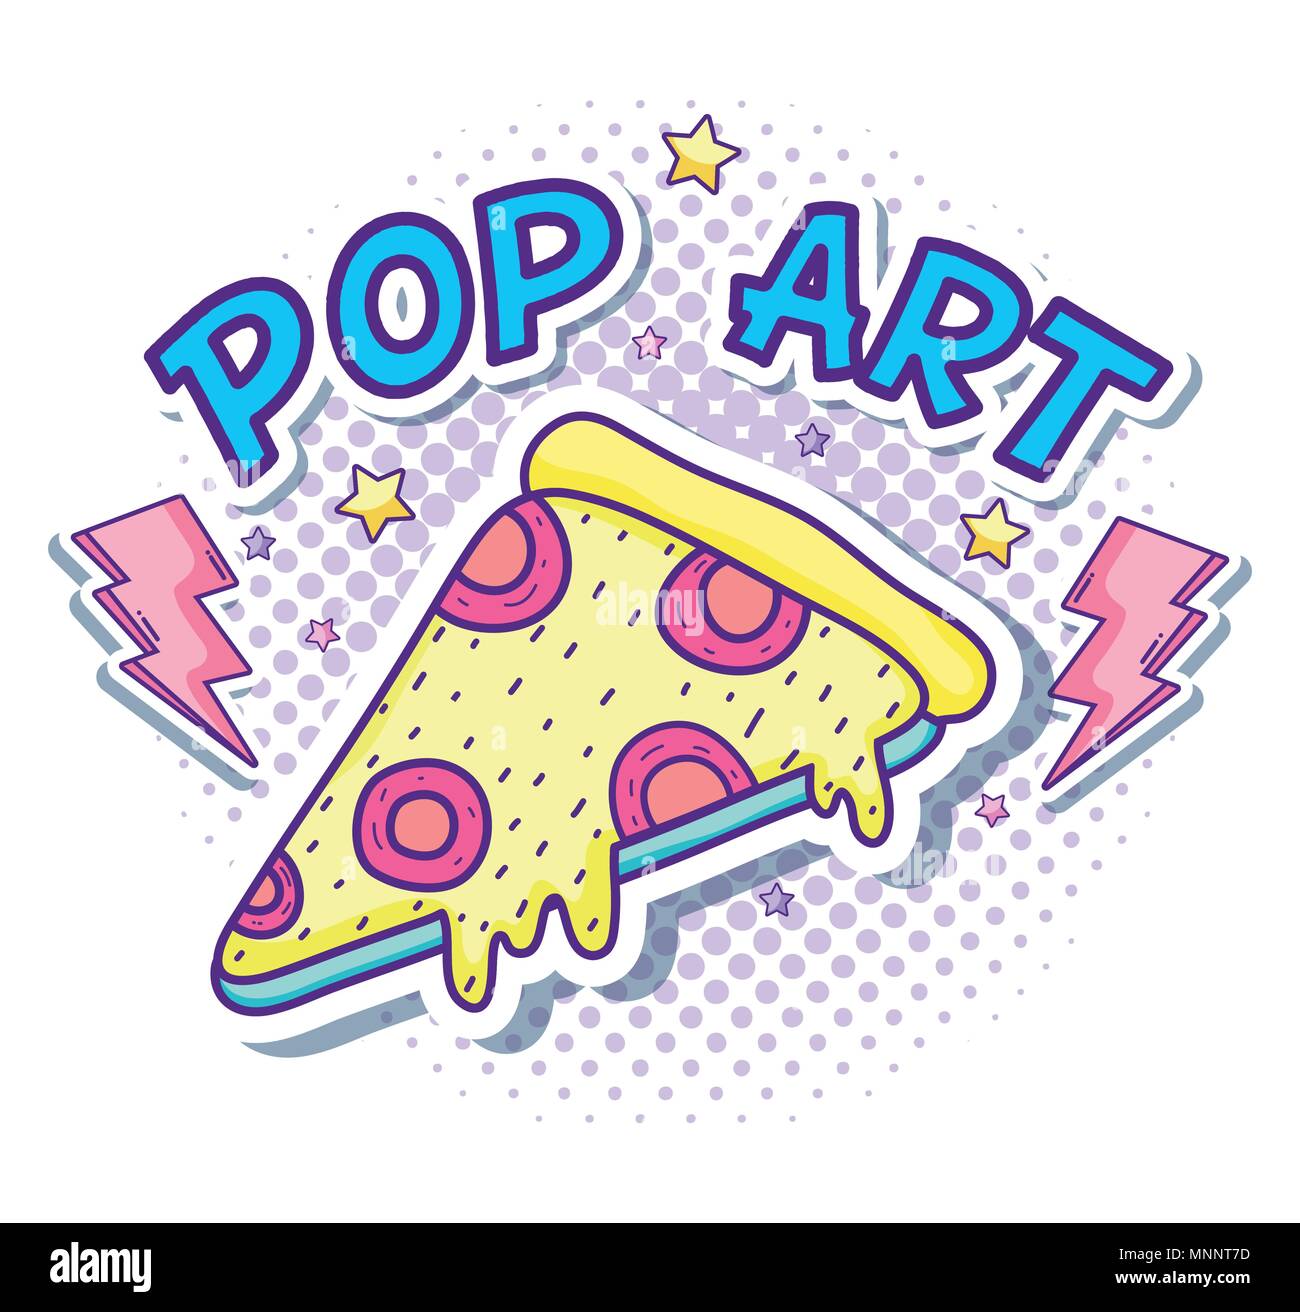 Pizza pop Stock Image & Art - Alamy